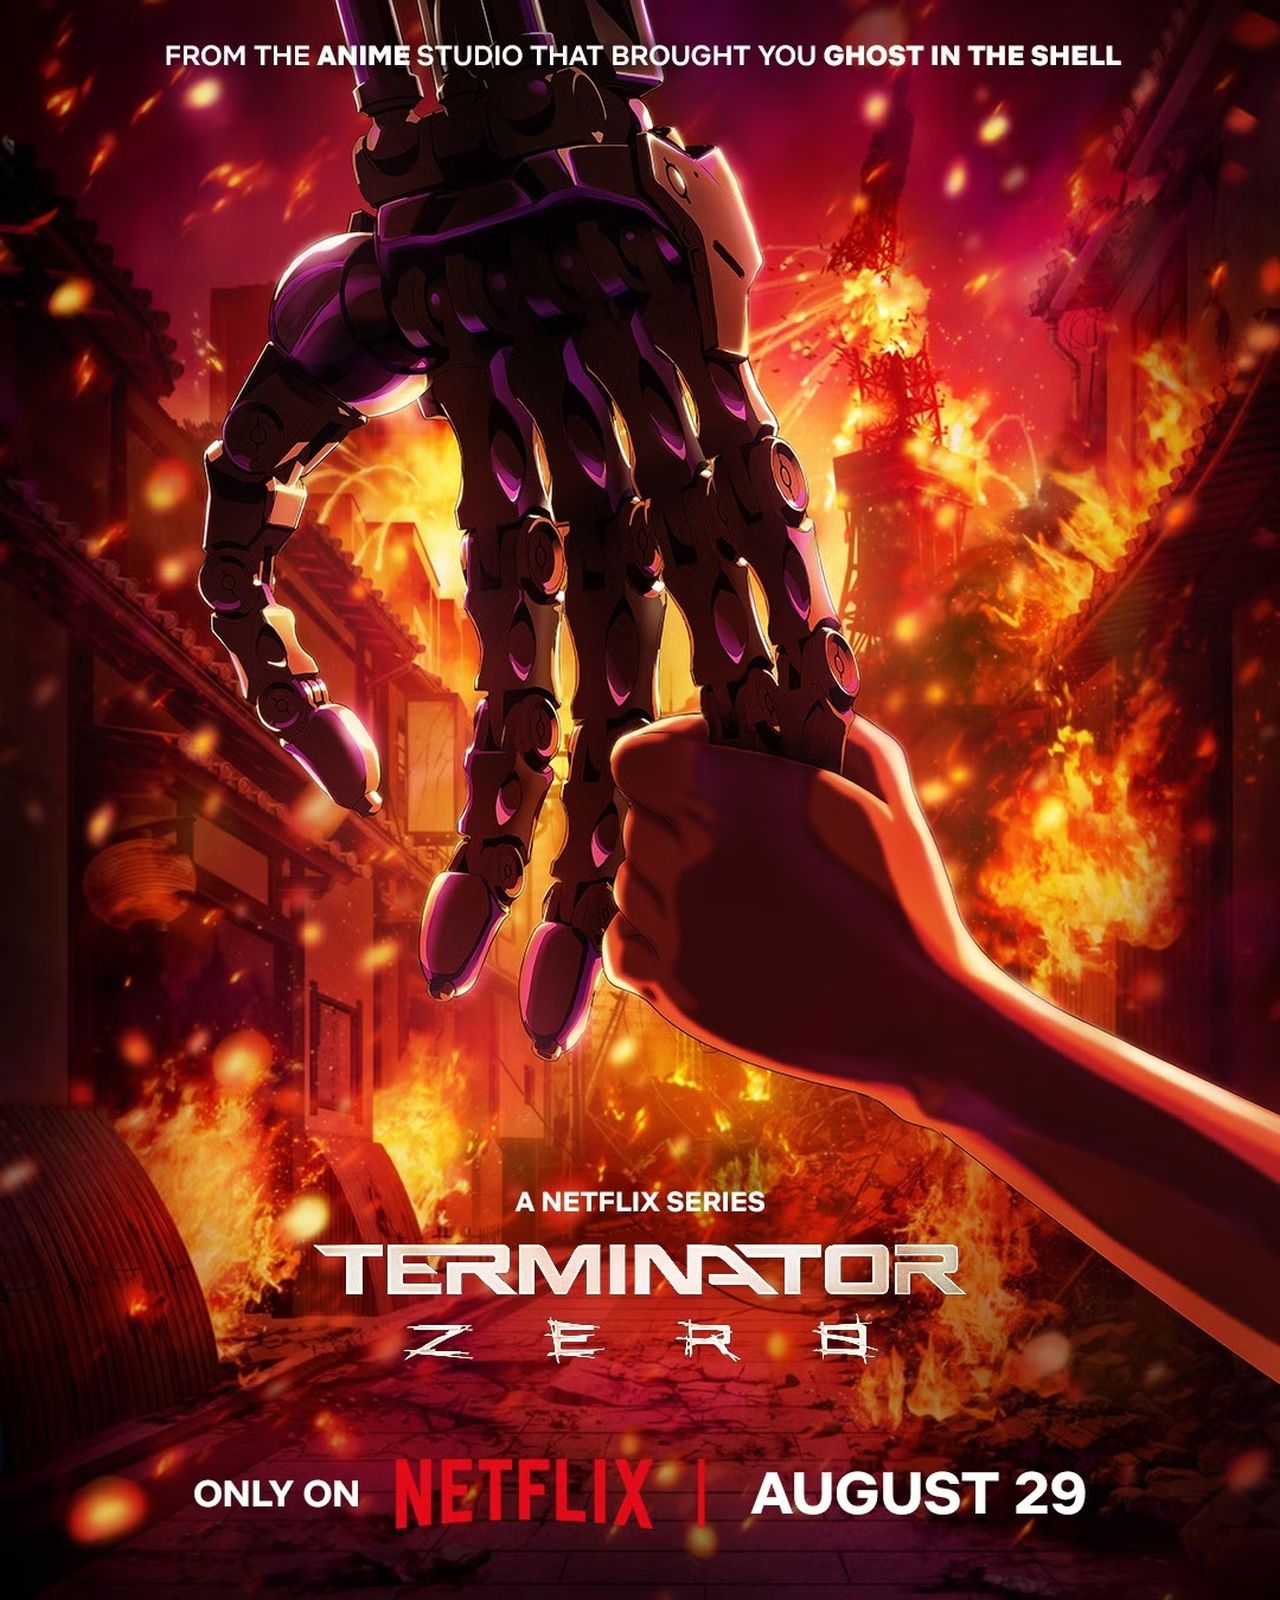 Terminator Zero Poster